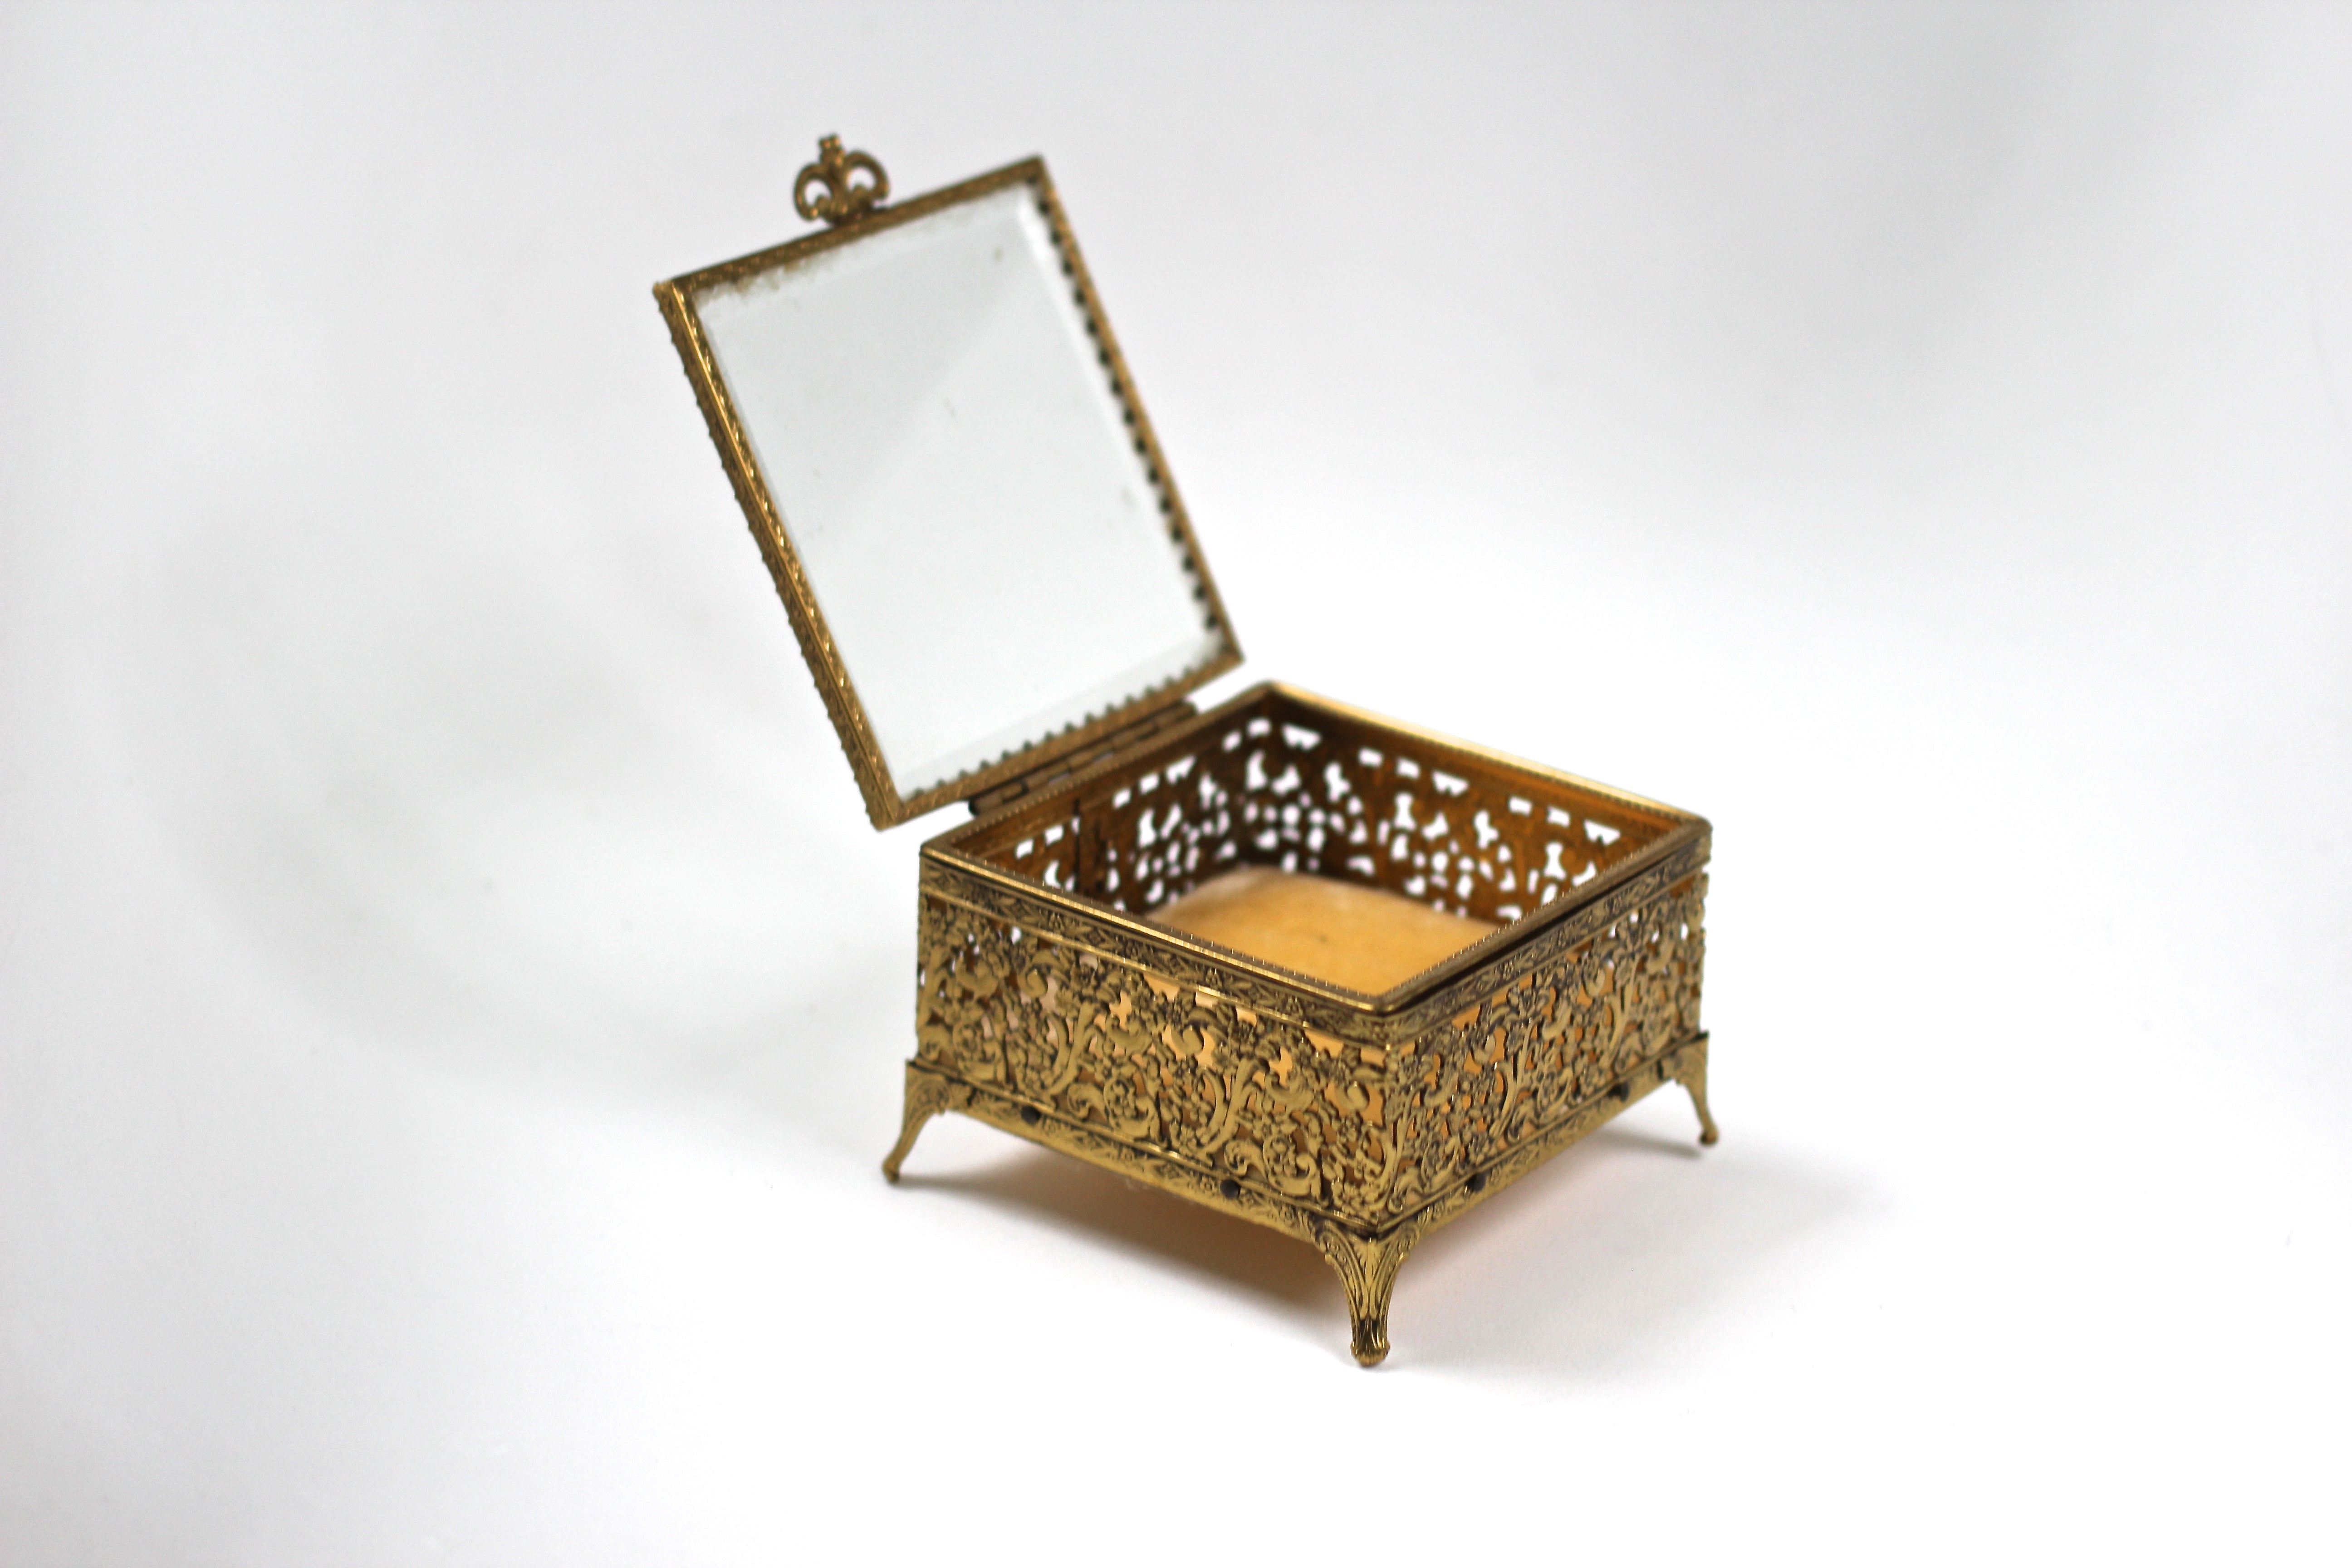 Antique Square Ormolu Filigree Jewelry Box